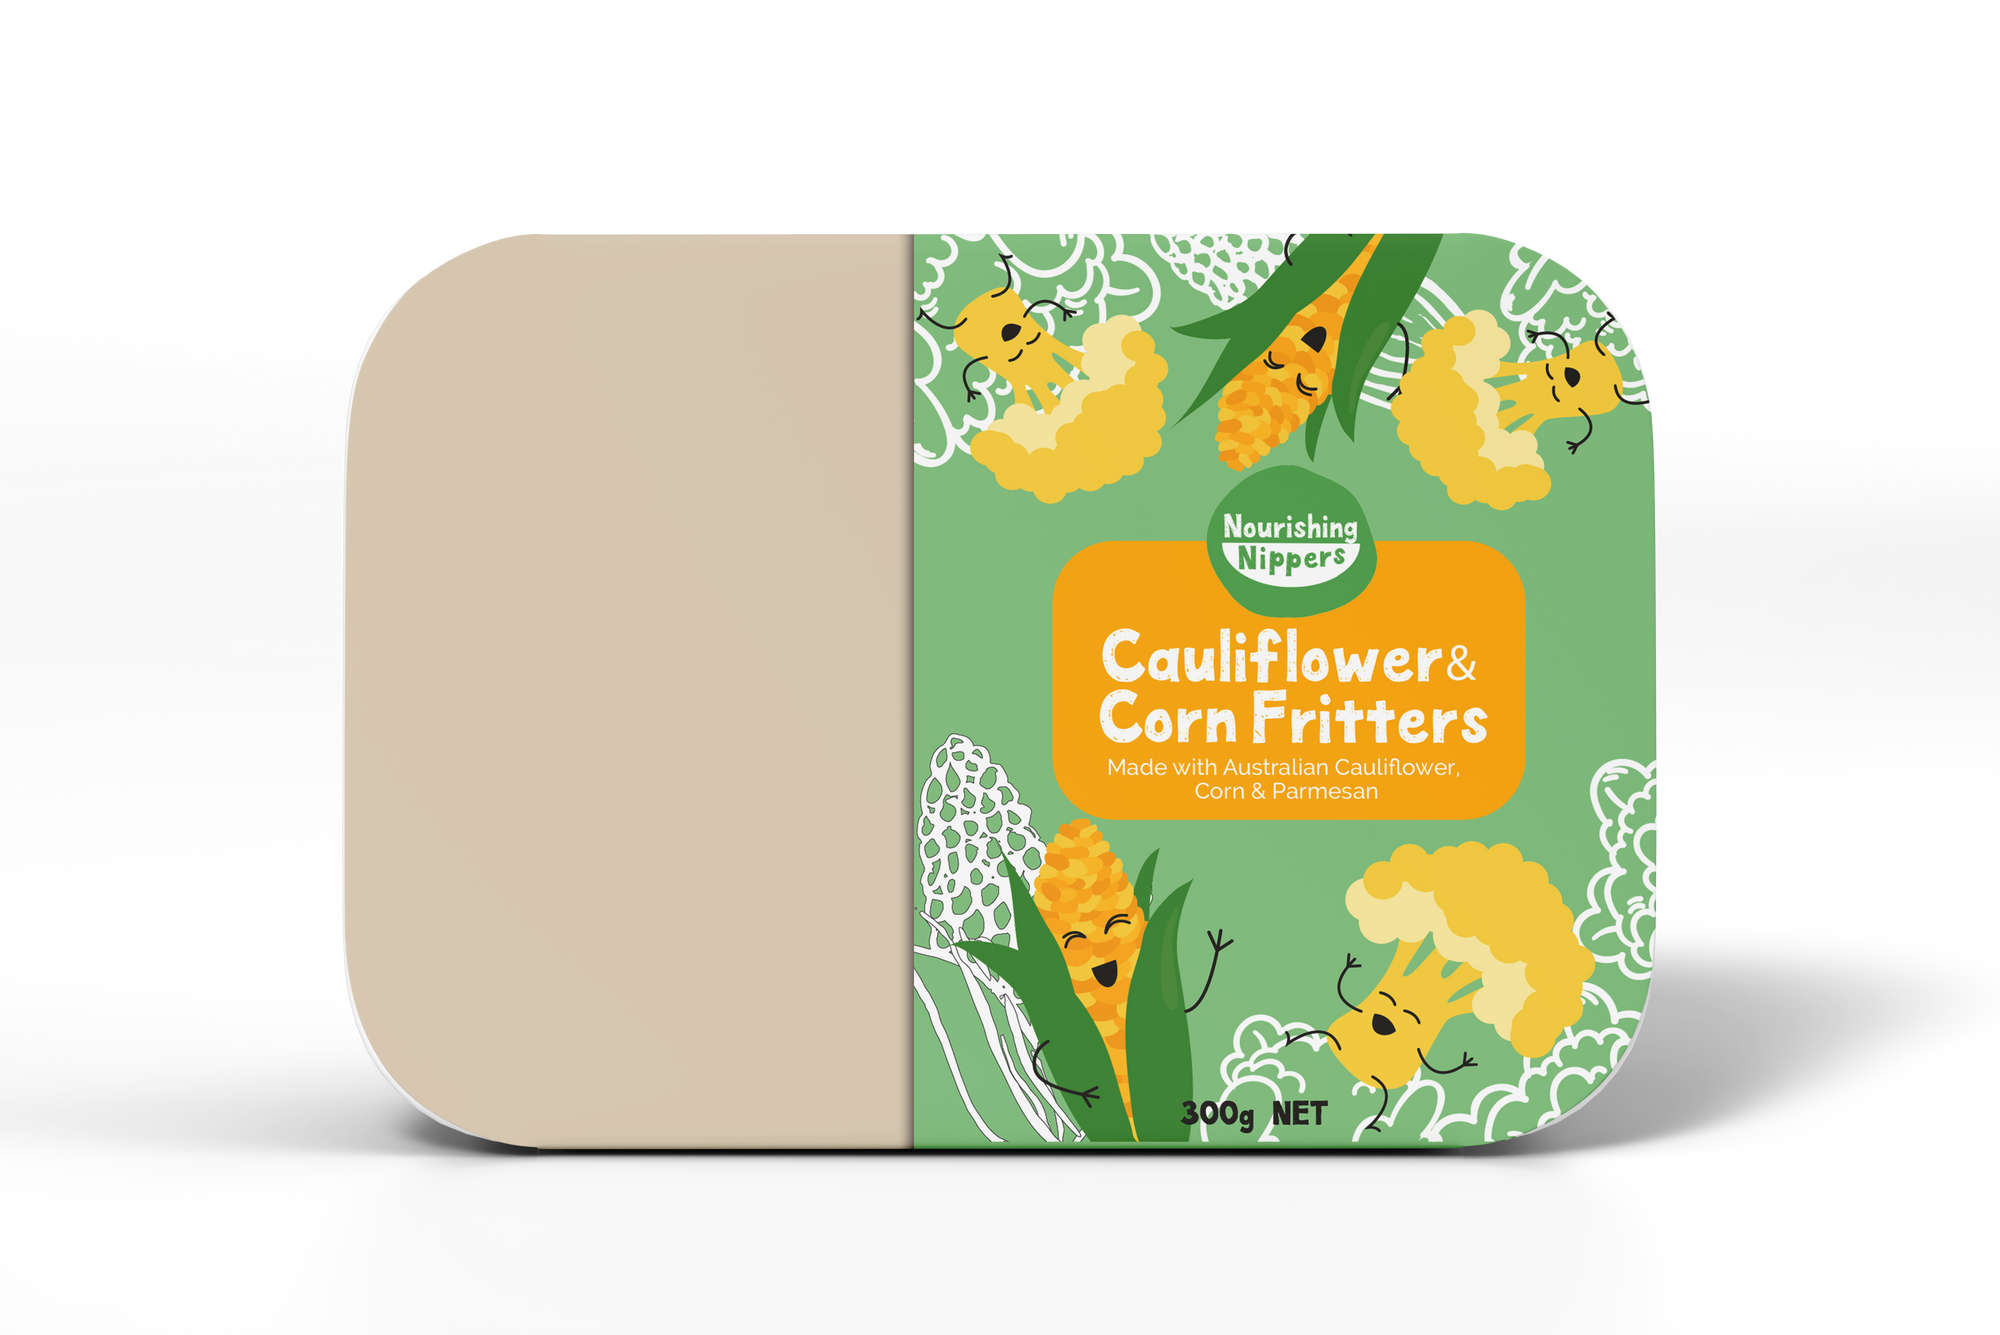 Nourishing Nippers Cauliflowers & Corn Fritters (300g)